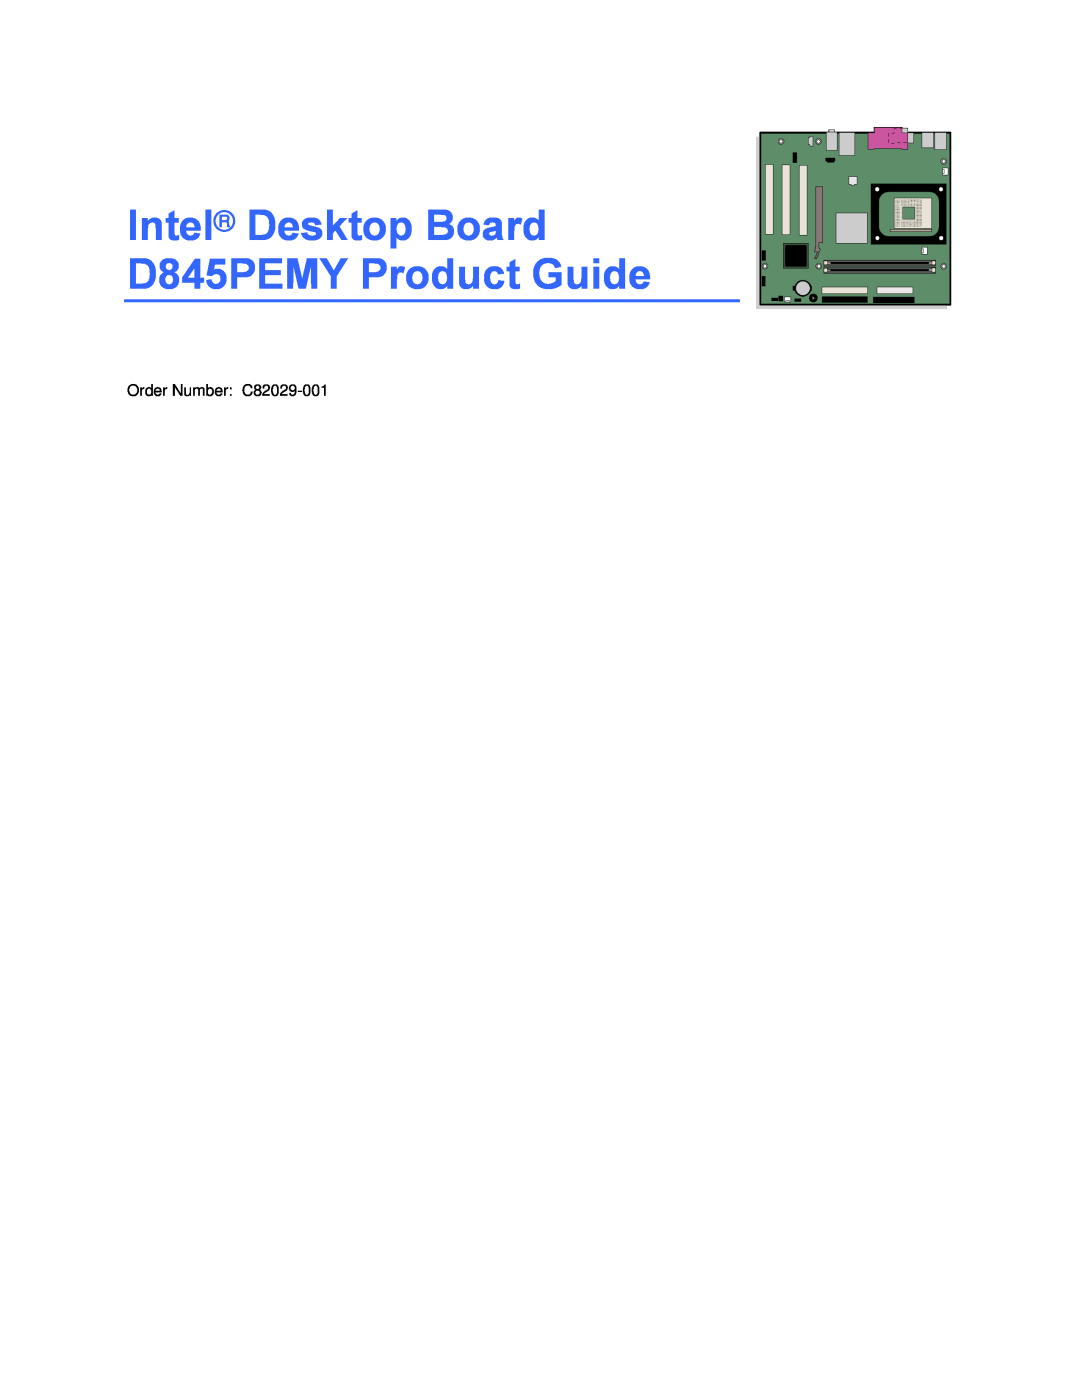 Intel manual Intel Desktop Board D845PEMY Product Guide, Order Number C82029-001 